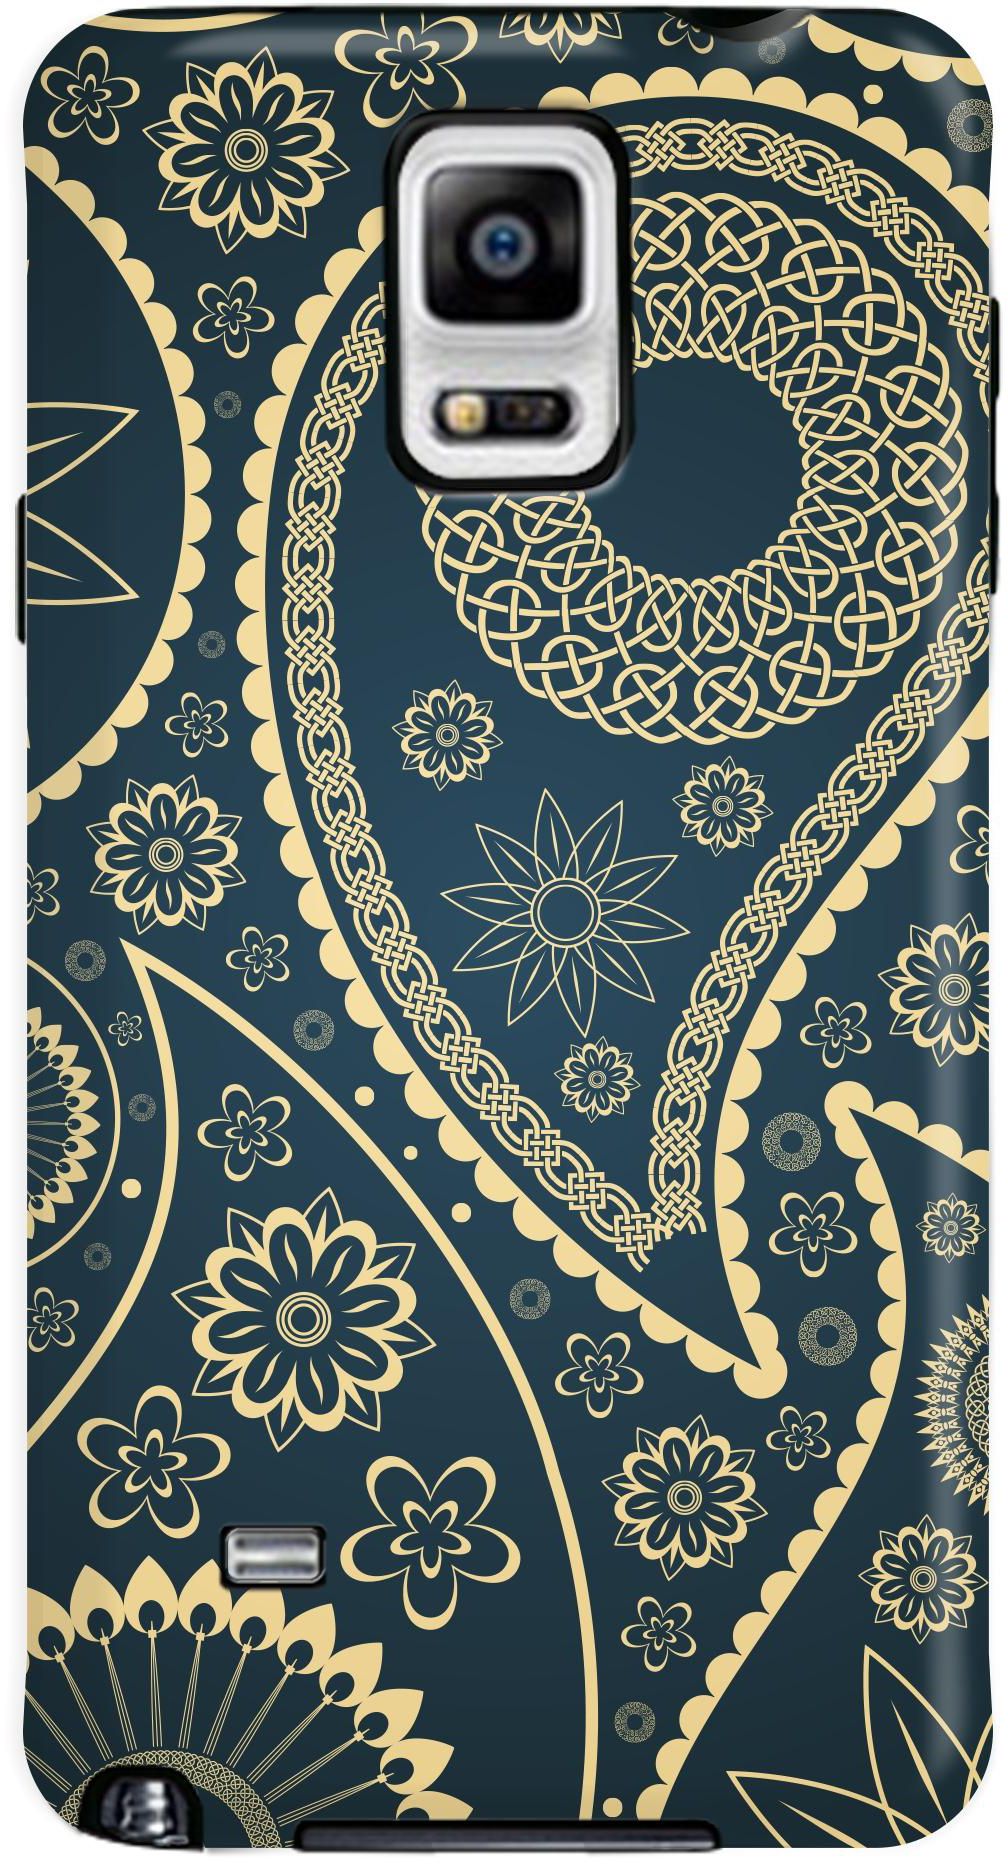 Stylizedd Samsung Galaxy Note 4 Premium Dual Layer Tough Case Cover Matte Finish - Indian Nights